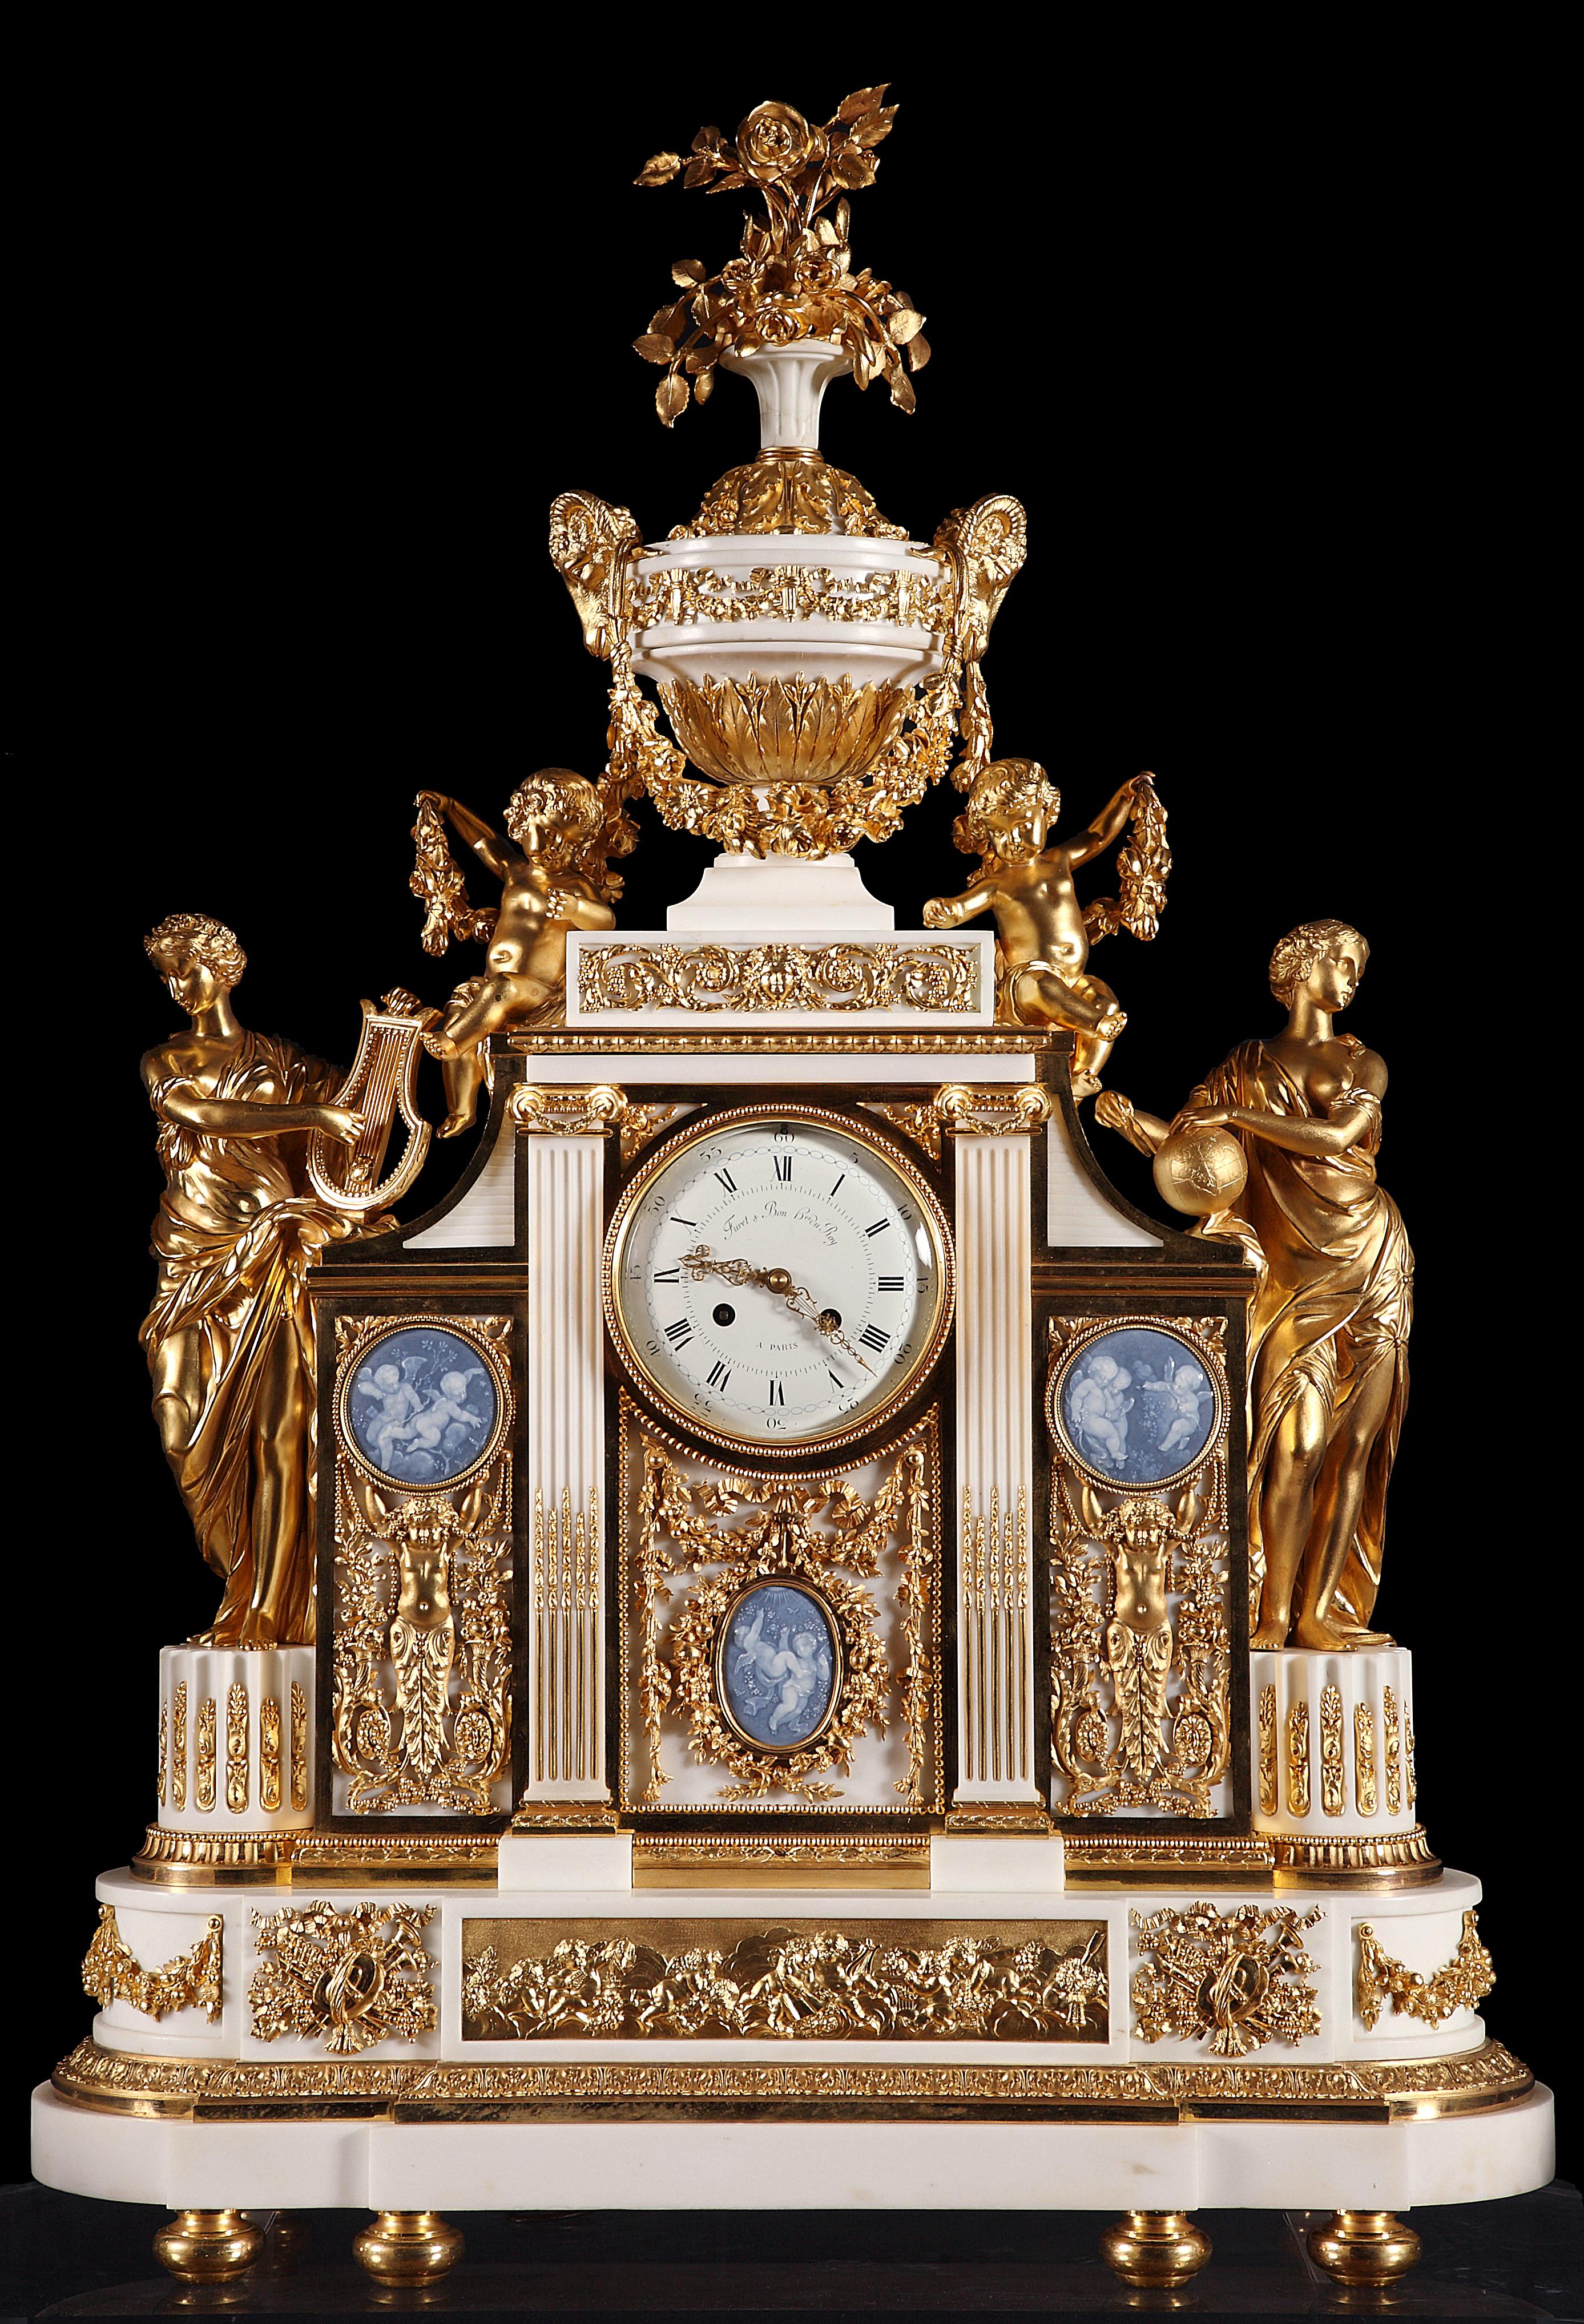 Marked on the dial Furet & Bon, Hrs du Roy, à Paris

Measures: Clock – Height 98 cm (38 1/2 in.), width 70 cm (27 1/2 in.), depth 25 cm (9 3/4 in.)
Candelabra – Height 116 cm (45 2/3 in.) & 92 cm (36 1/4 in.), diameter 50 cm (19 2/3